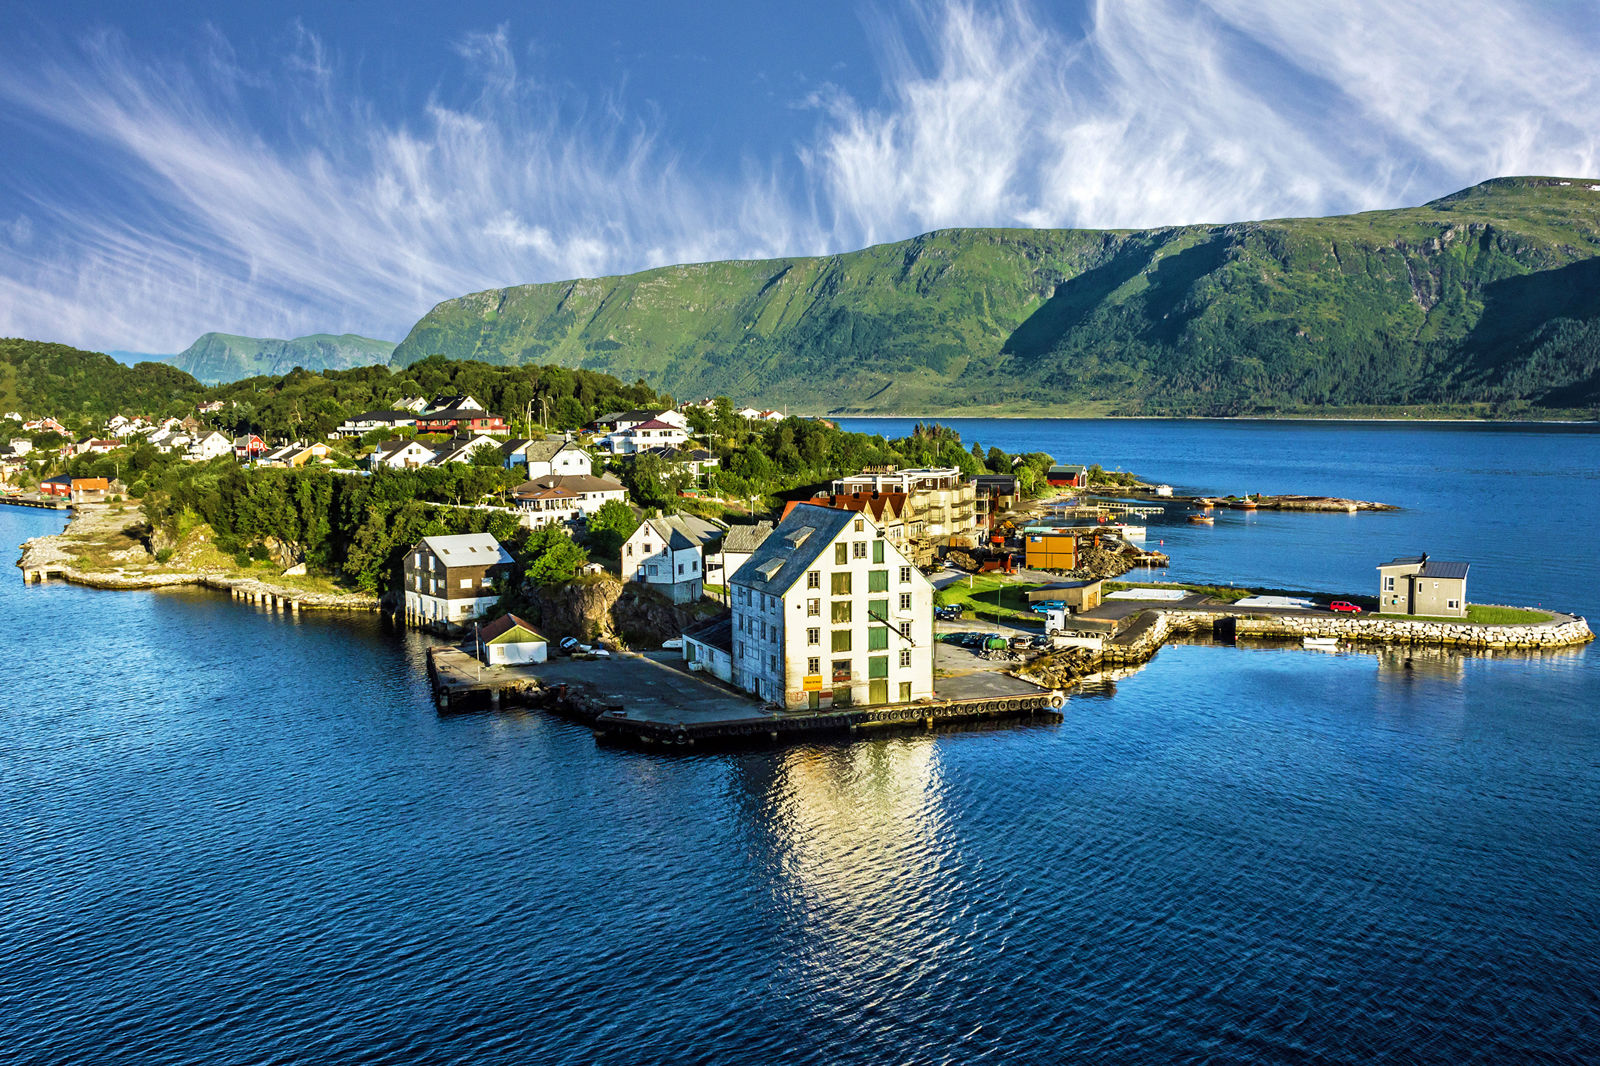 Cruise Noorwegen en Noordkaap incl. busreis